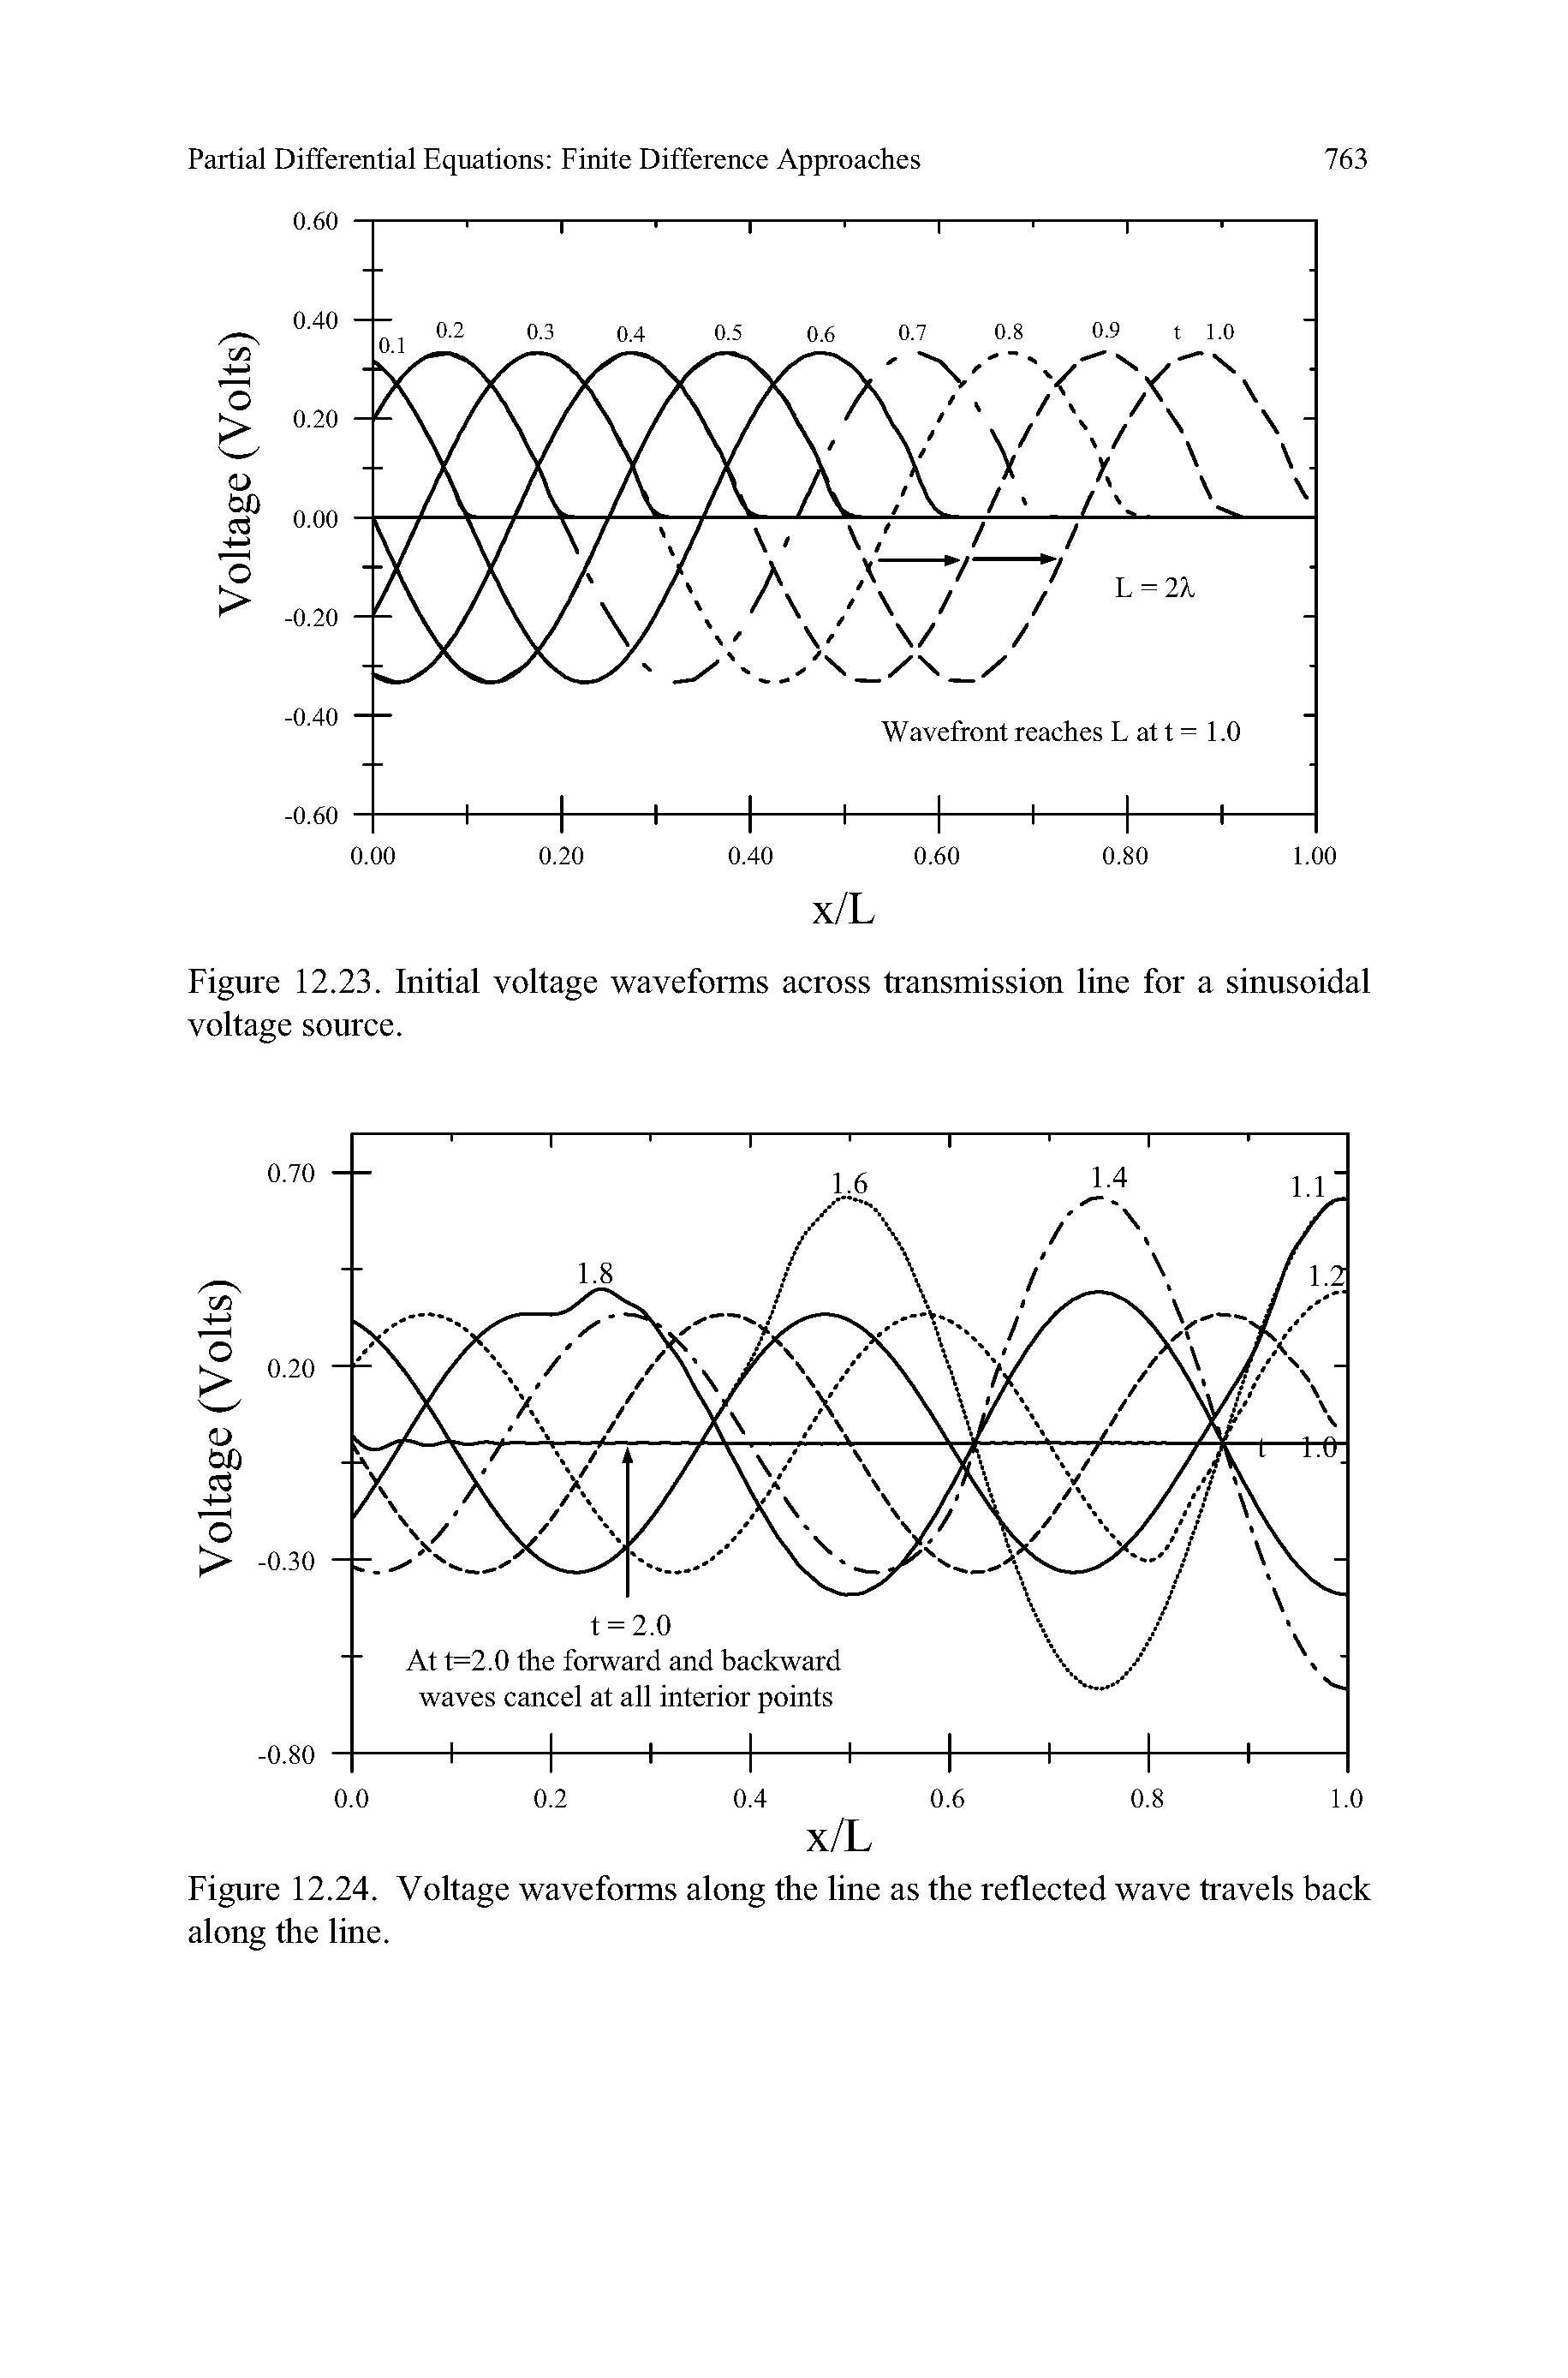 Figure 12.23. Initial voltage waveforms aeross transmission line for a sinusoidal voltage souree.